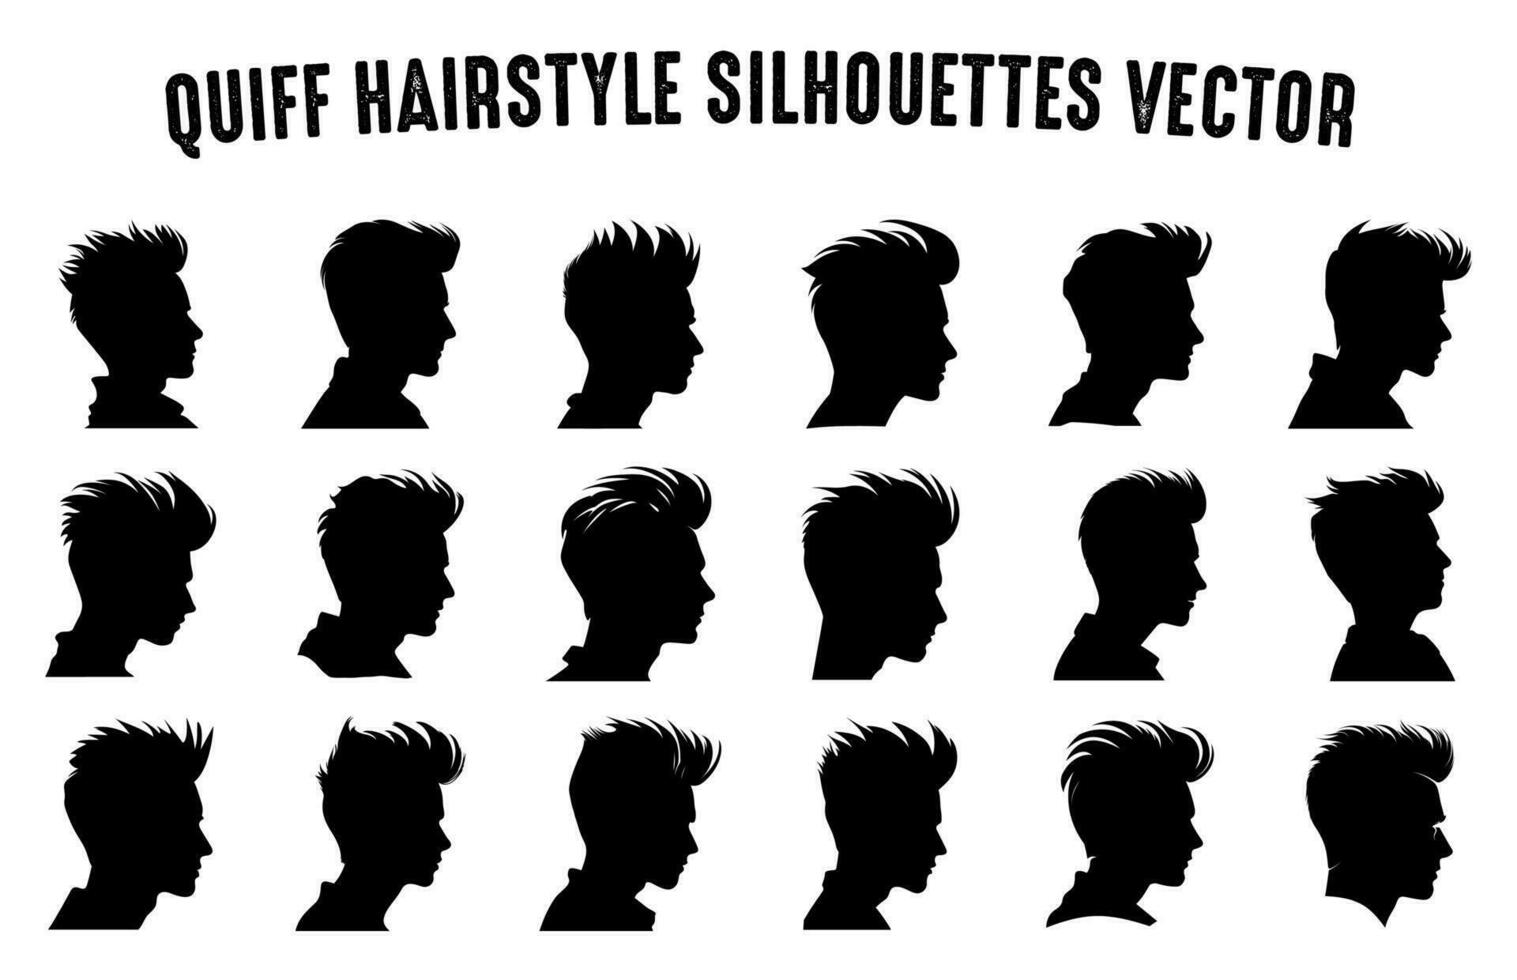 Quiff haircut Silhouette clipart Bundle, Men hair cut Vector Set, Trendy stylish Male hairstyle Silhouettes